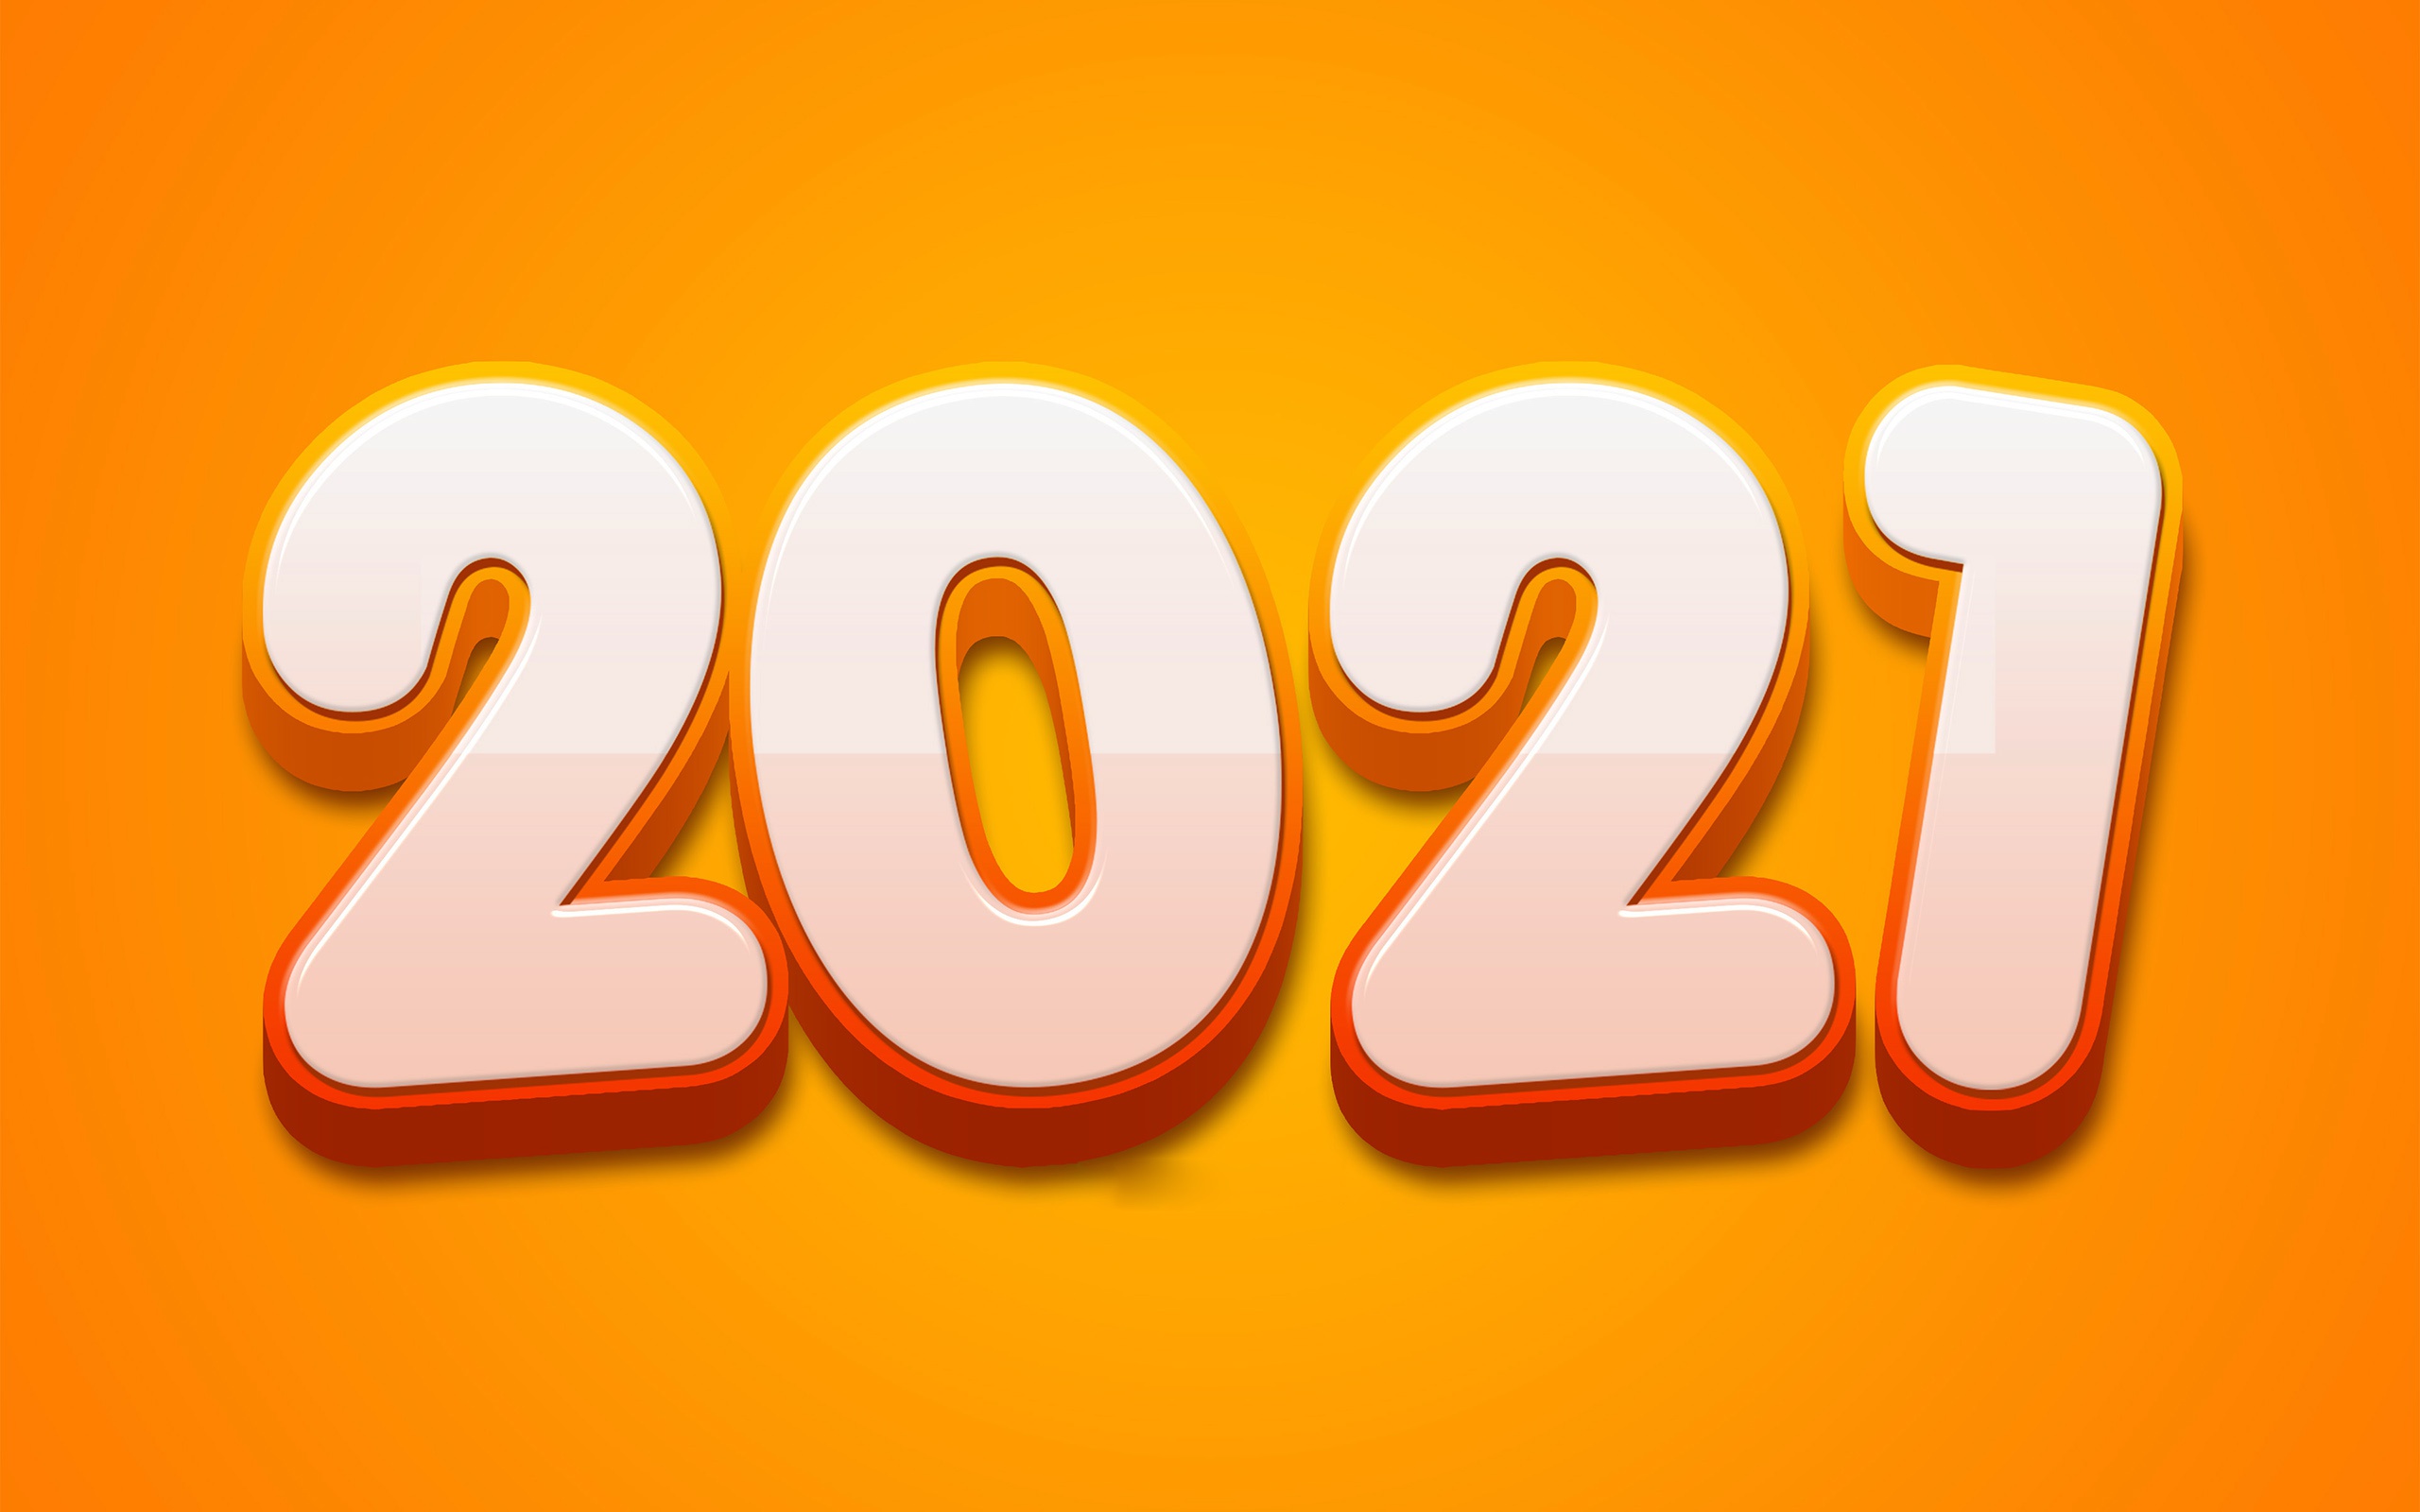 Новый год 2021 сайт. 2021 Год. Картинка 2021 год. Новый год 2021. 2021 Год цифры.